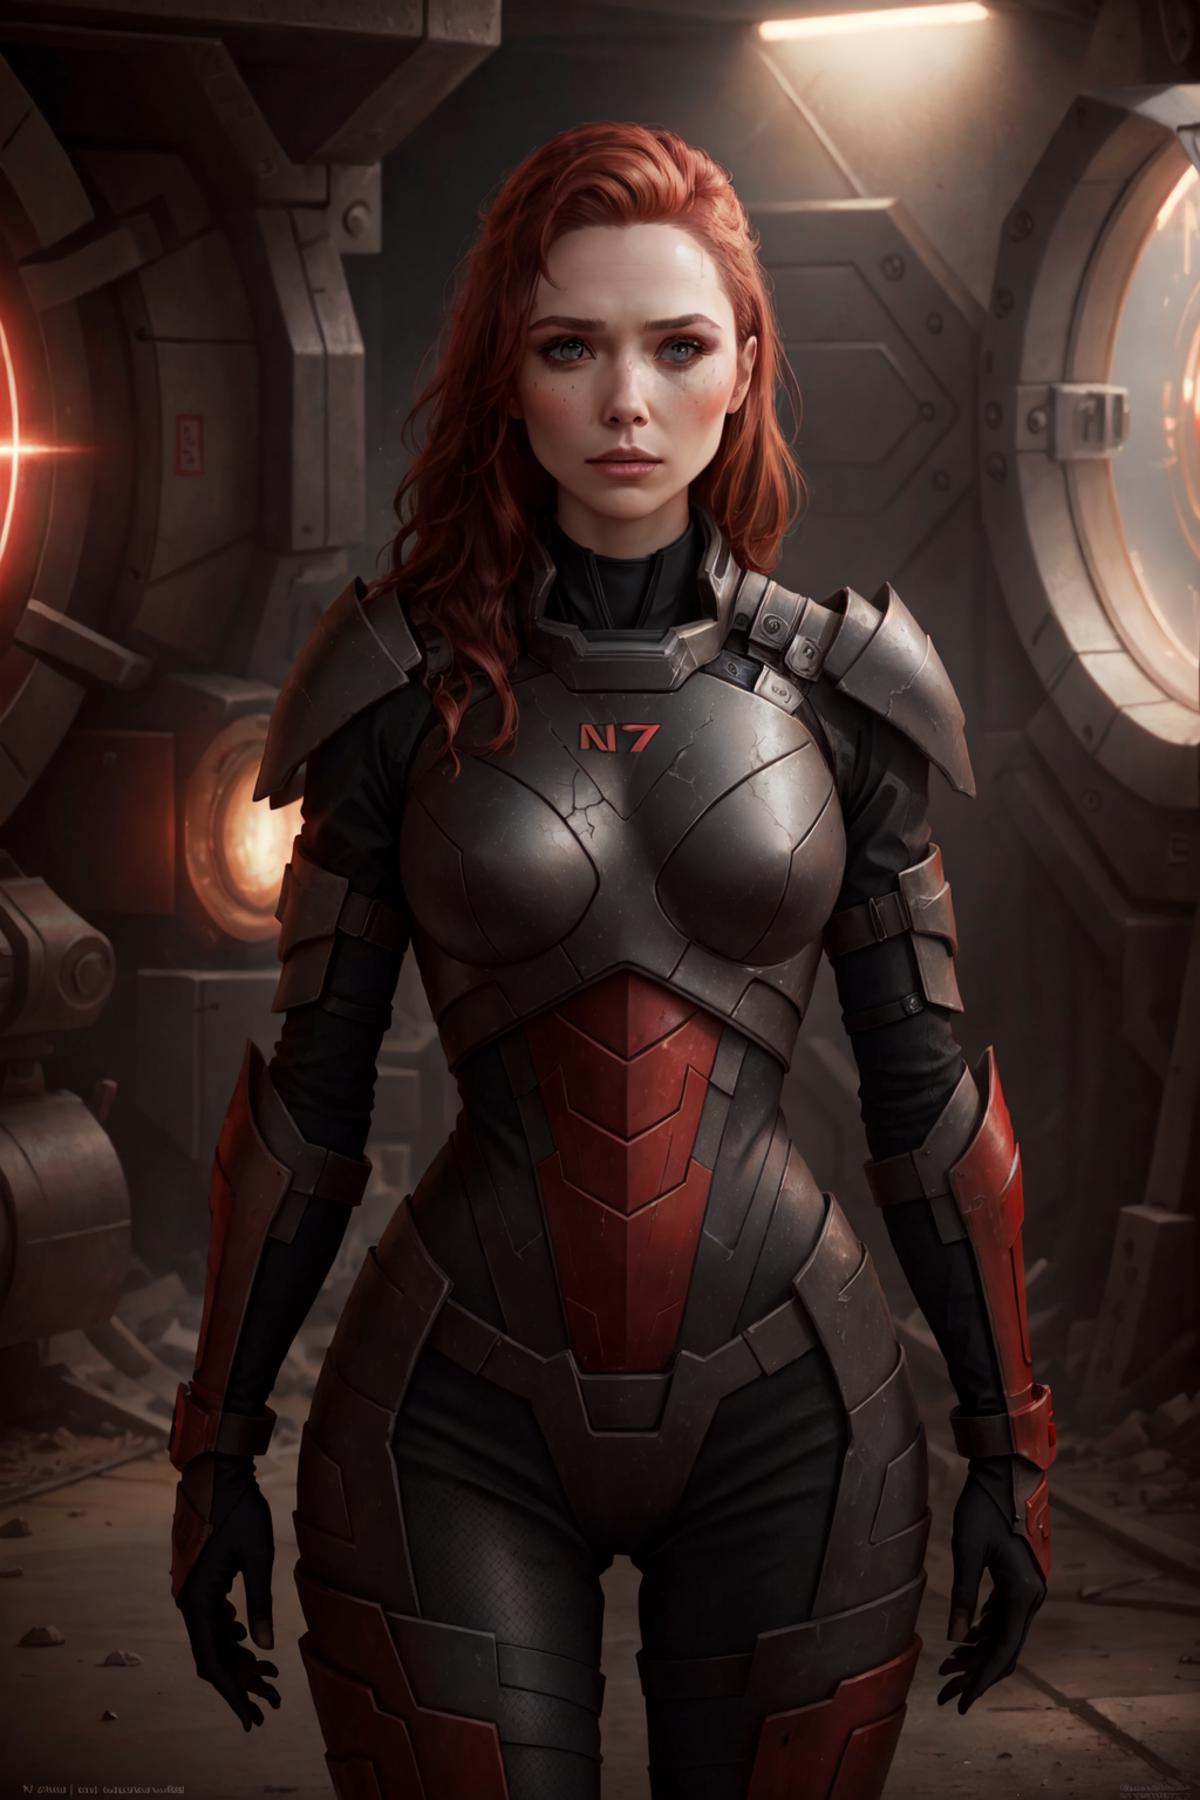 N7 Armor (Mass Effect) LoRA image by ADMNtek